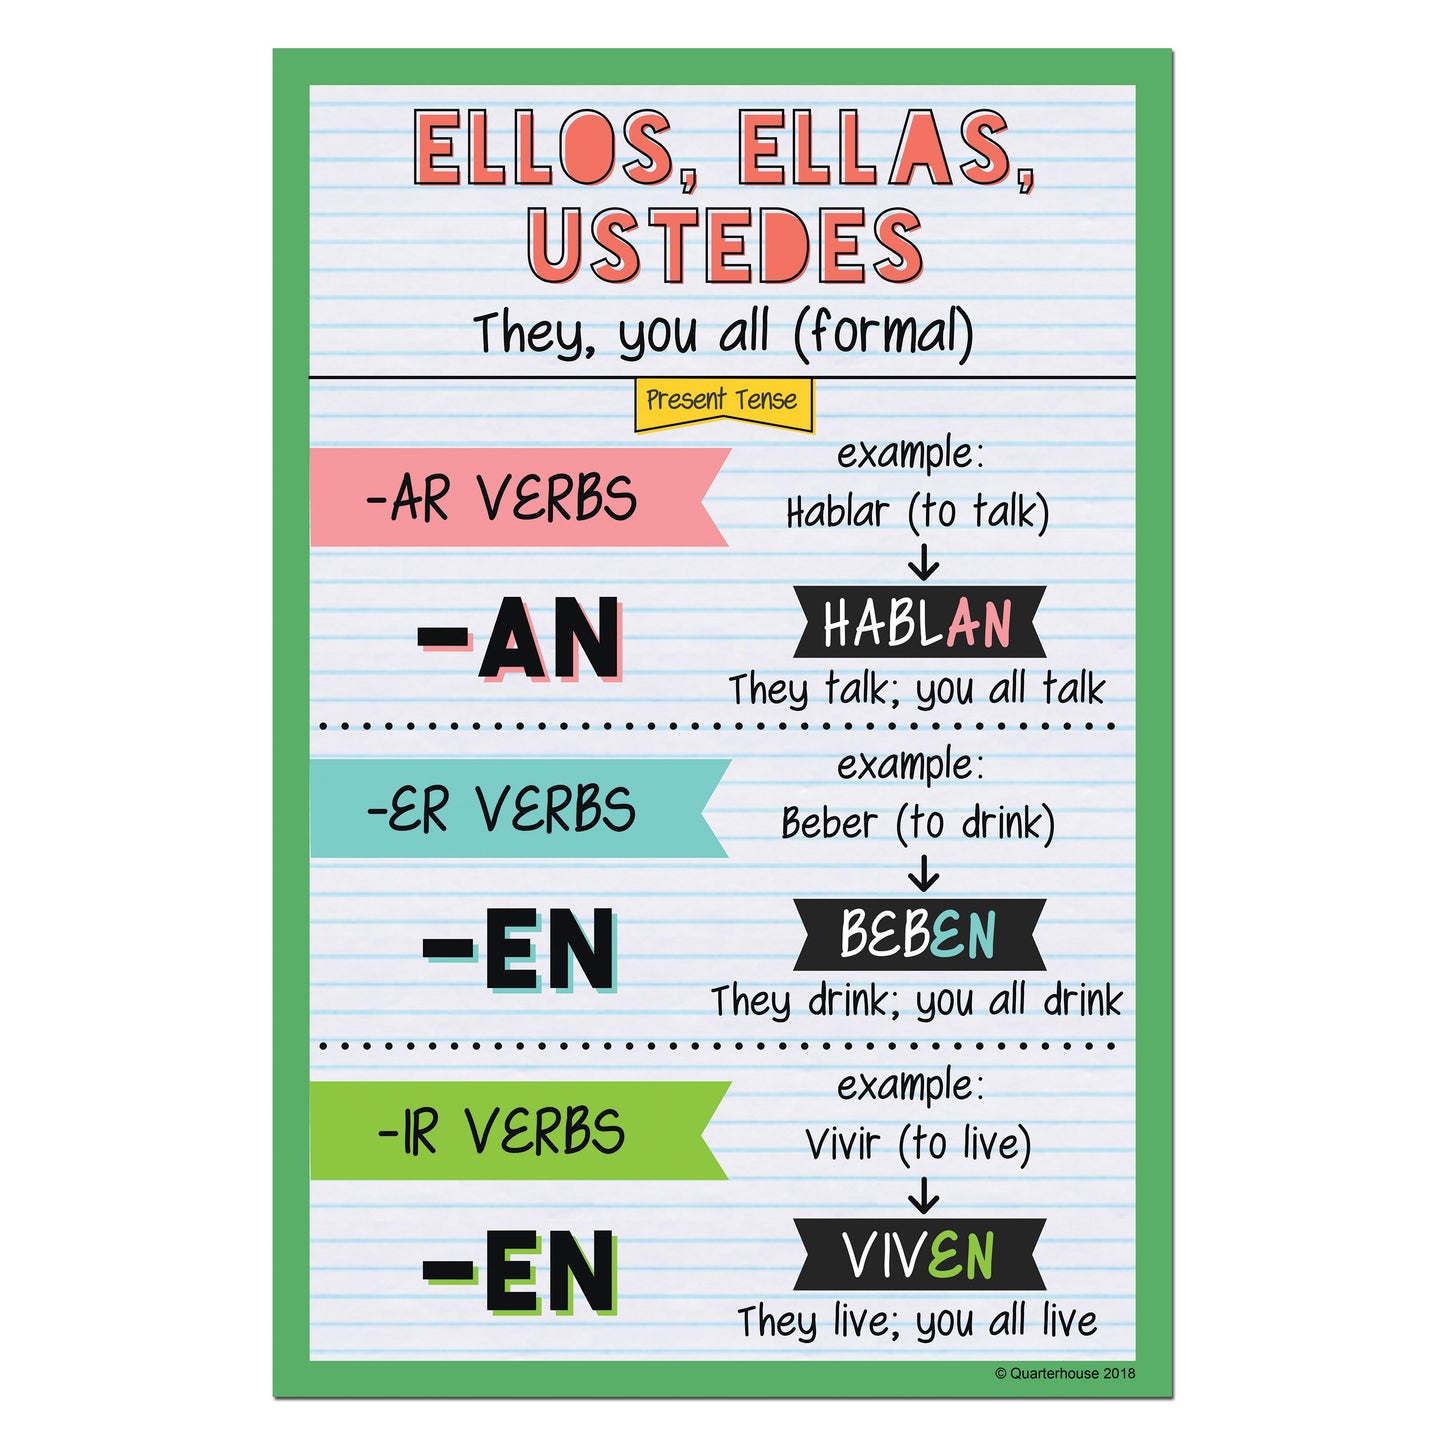 Quarterhouse Ellos, Ellas, Ustedes - Present Tense Spanish Verb Conjugation Poster, Spanish and ESL Classroom Materials for Teachers